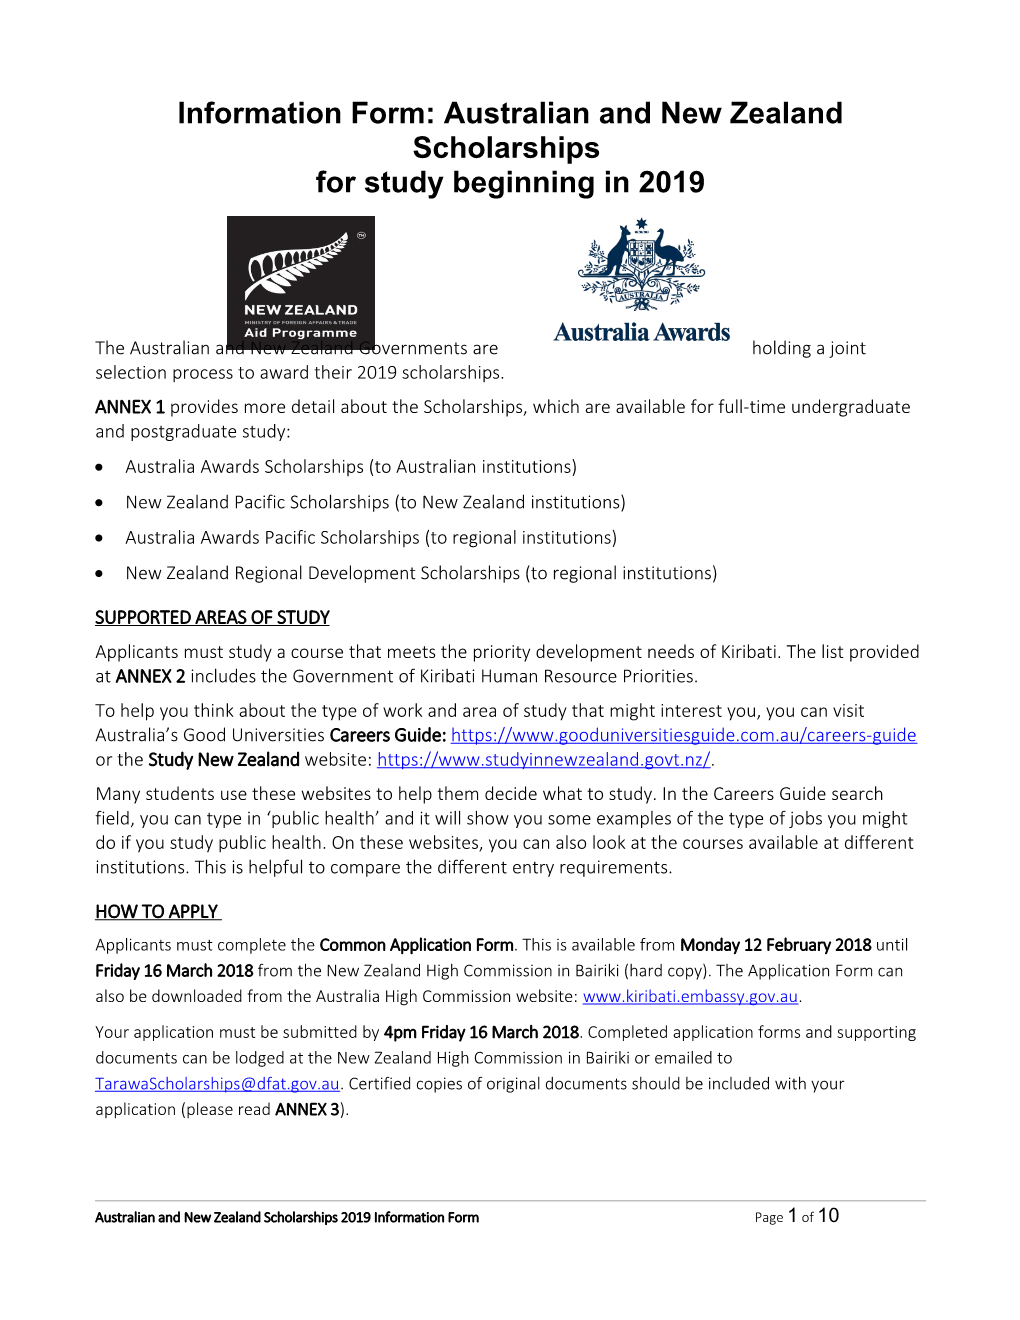 Information Form:Australian and New Zealand Scholarships